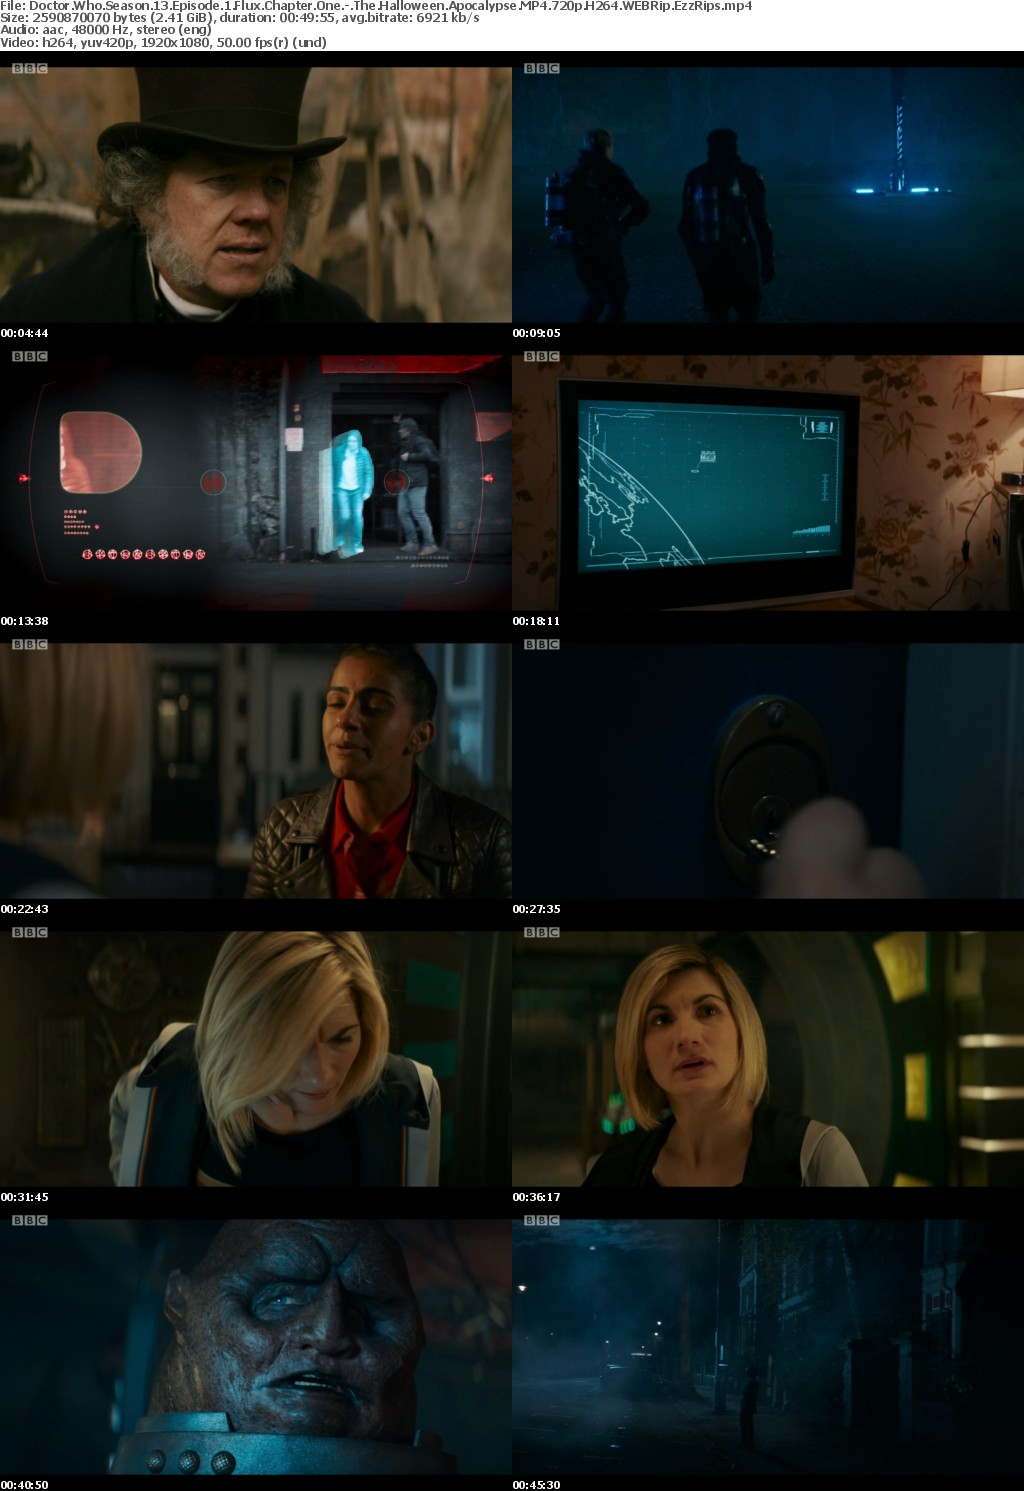 Doctor Who Season 13 Episode 1 Flux Chapter One - The Halloween Apocalypse MP4 720p H264 WEBRip EzzRips